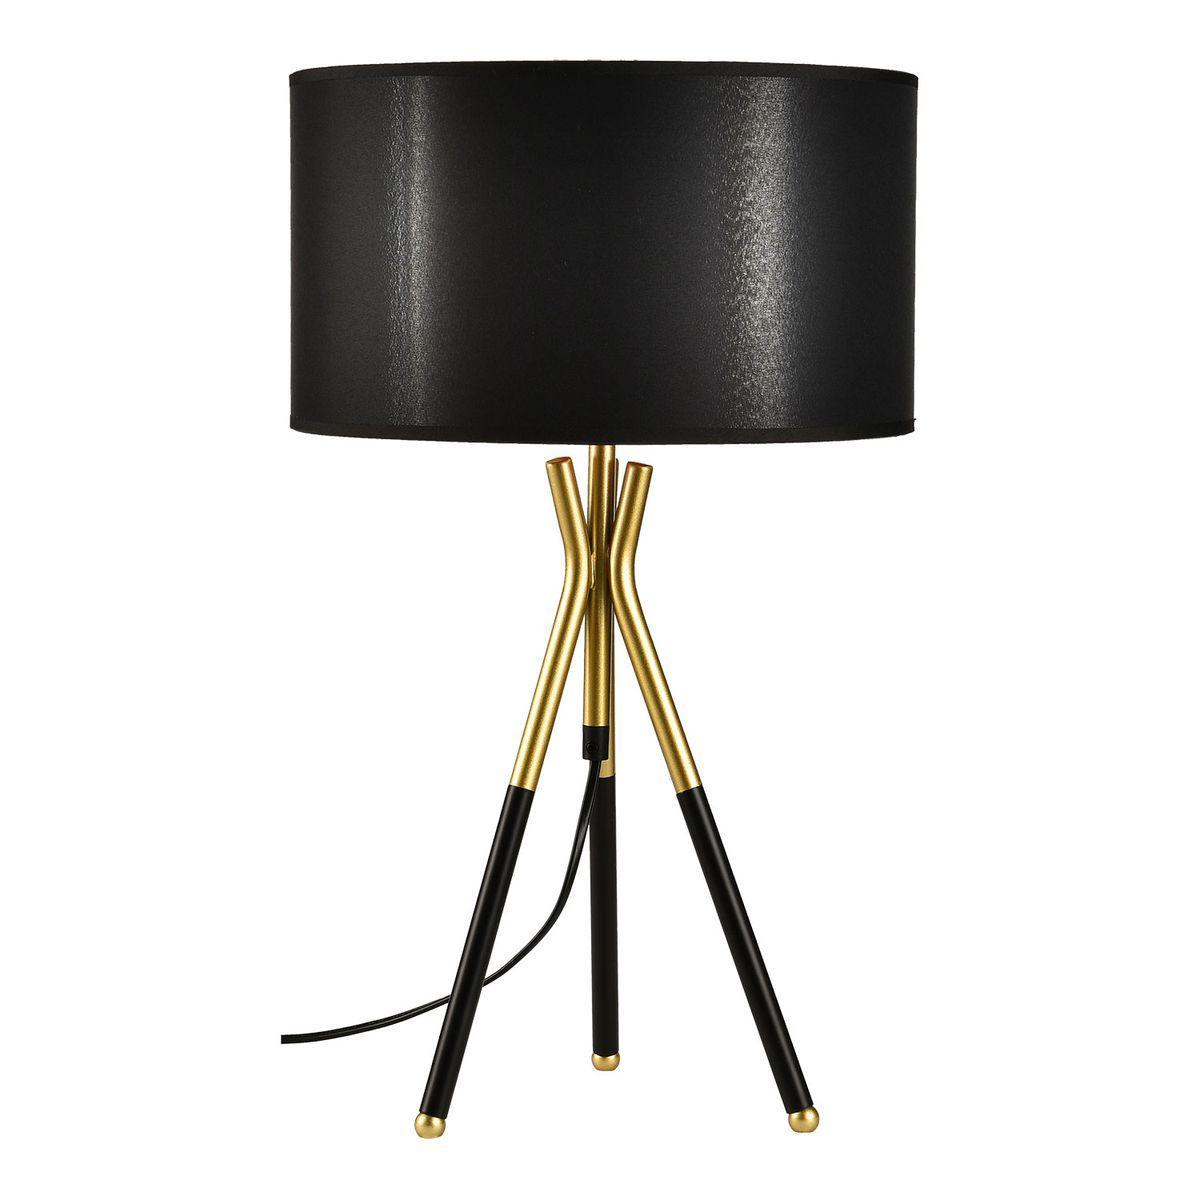 Настольная лампа Lussole Talladega LSP-0615 настольная лампа шахматный стиль е27 40вт чёрно золотой 14х14х40 см